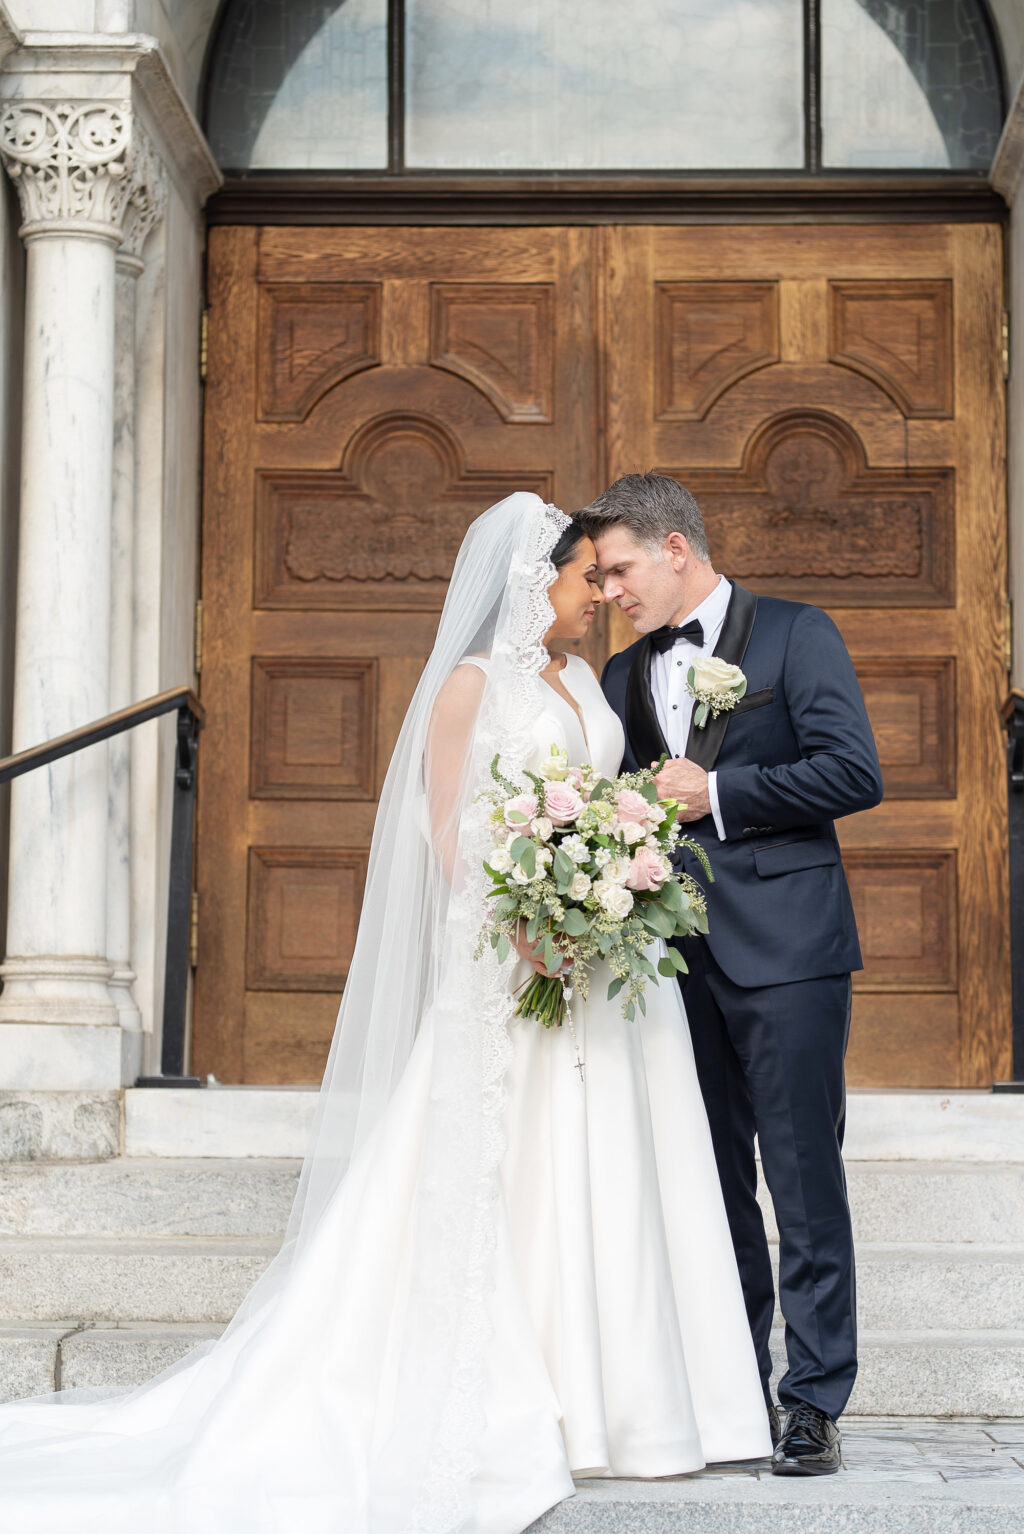 Bride and Groom Wedding Portrait| Tampa Bay Photographer Kristen Marie Photography | Venue Sacred Heart Catholic Church